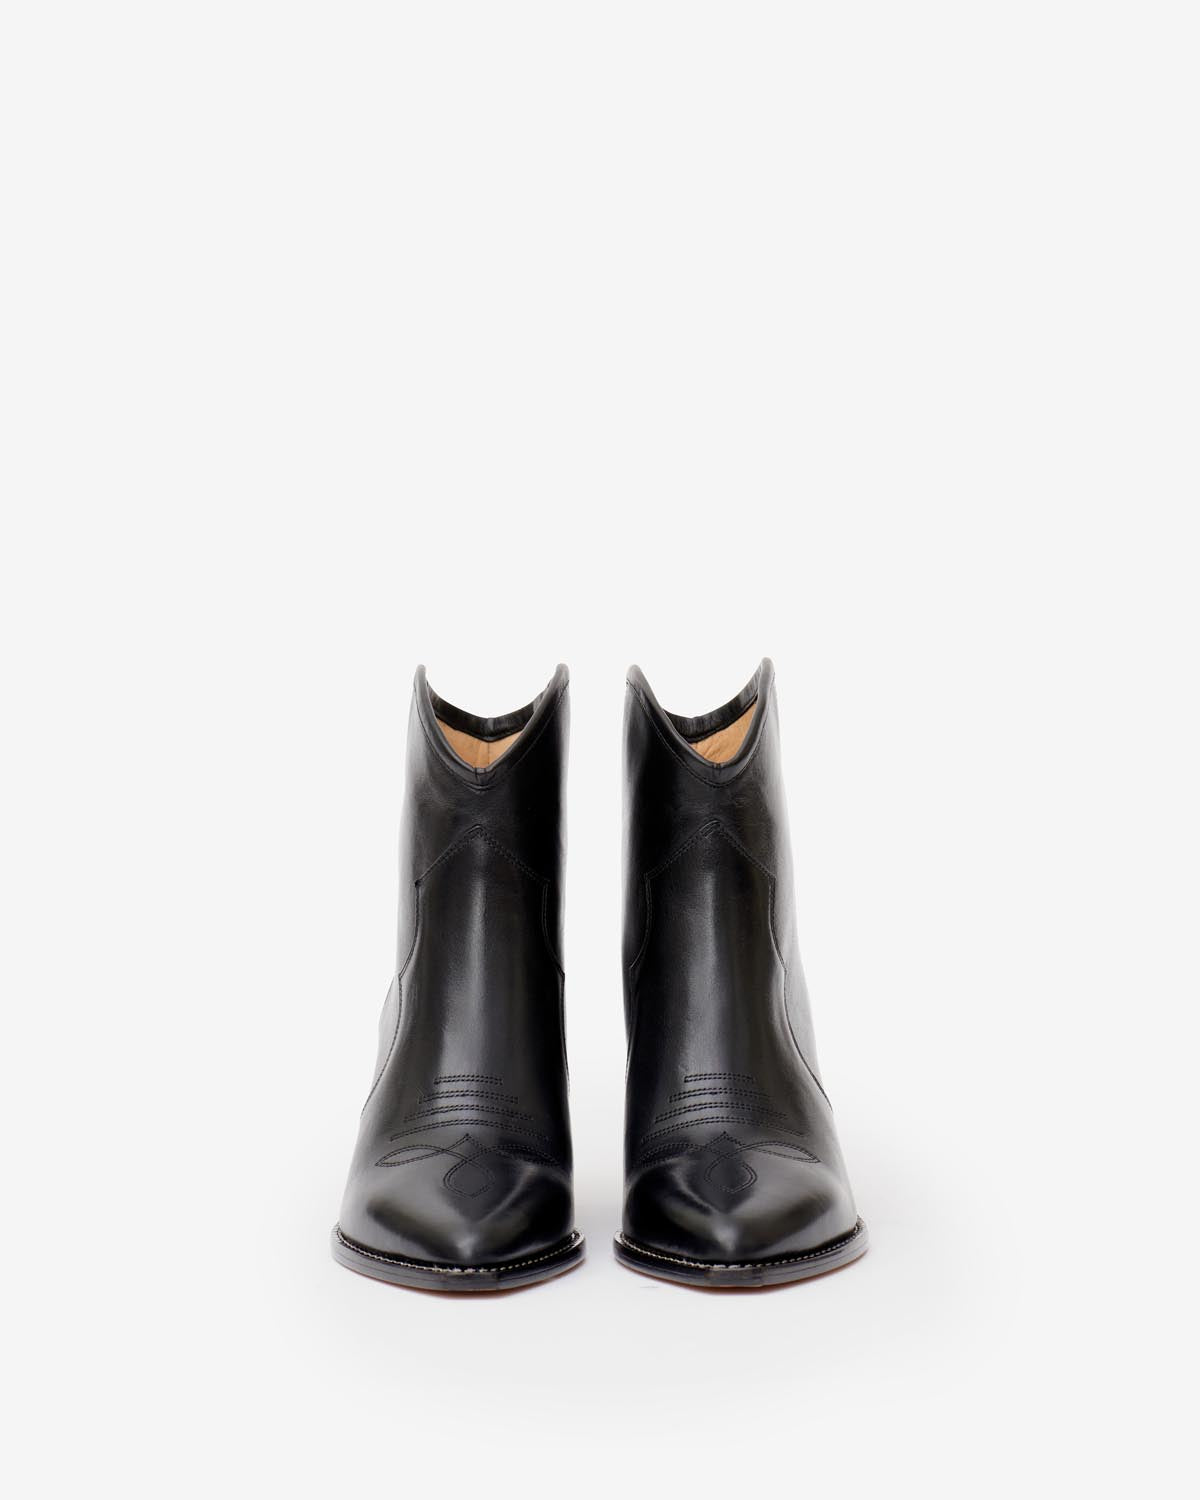 Boots darizo Woman Noir 3